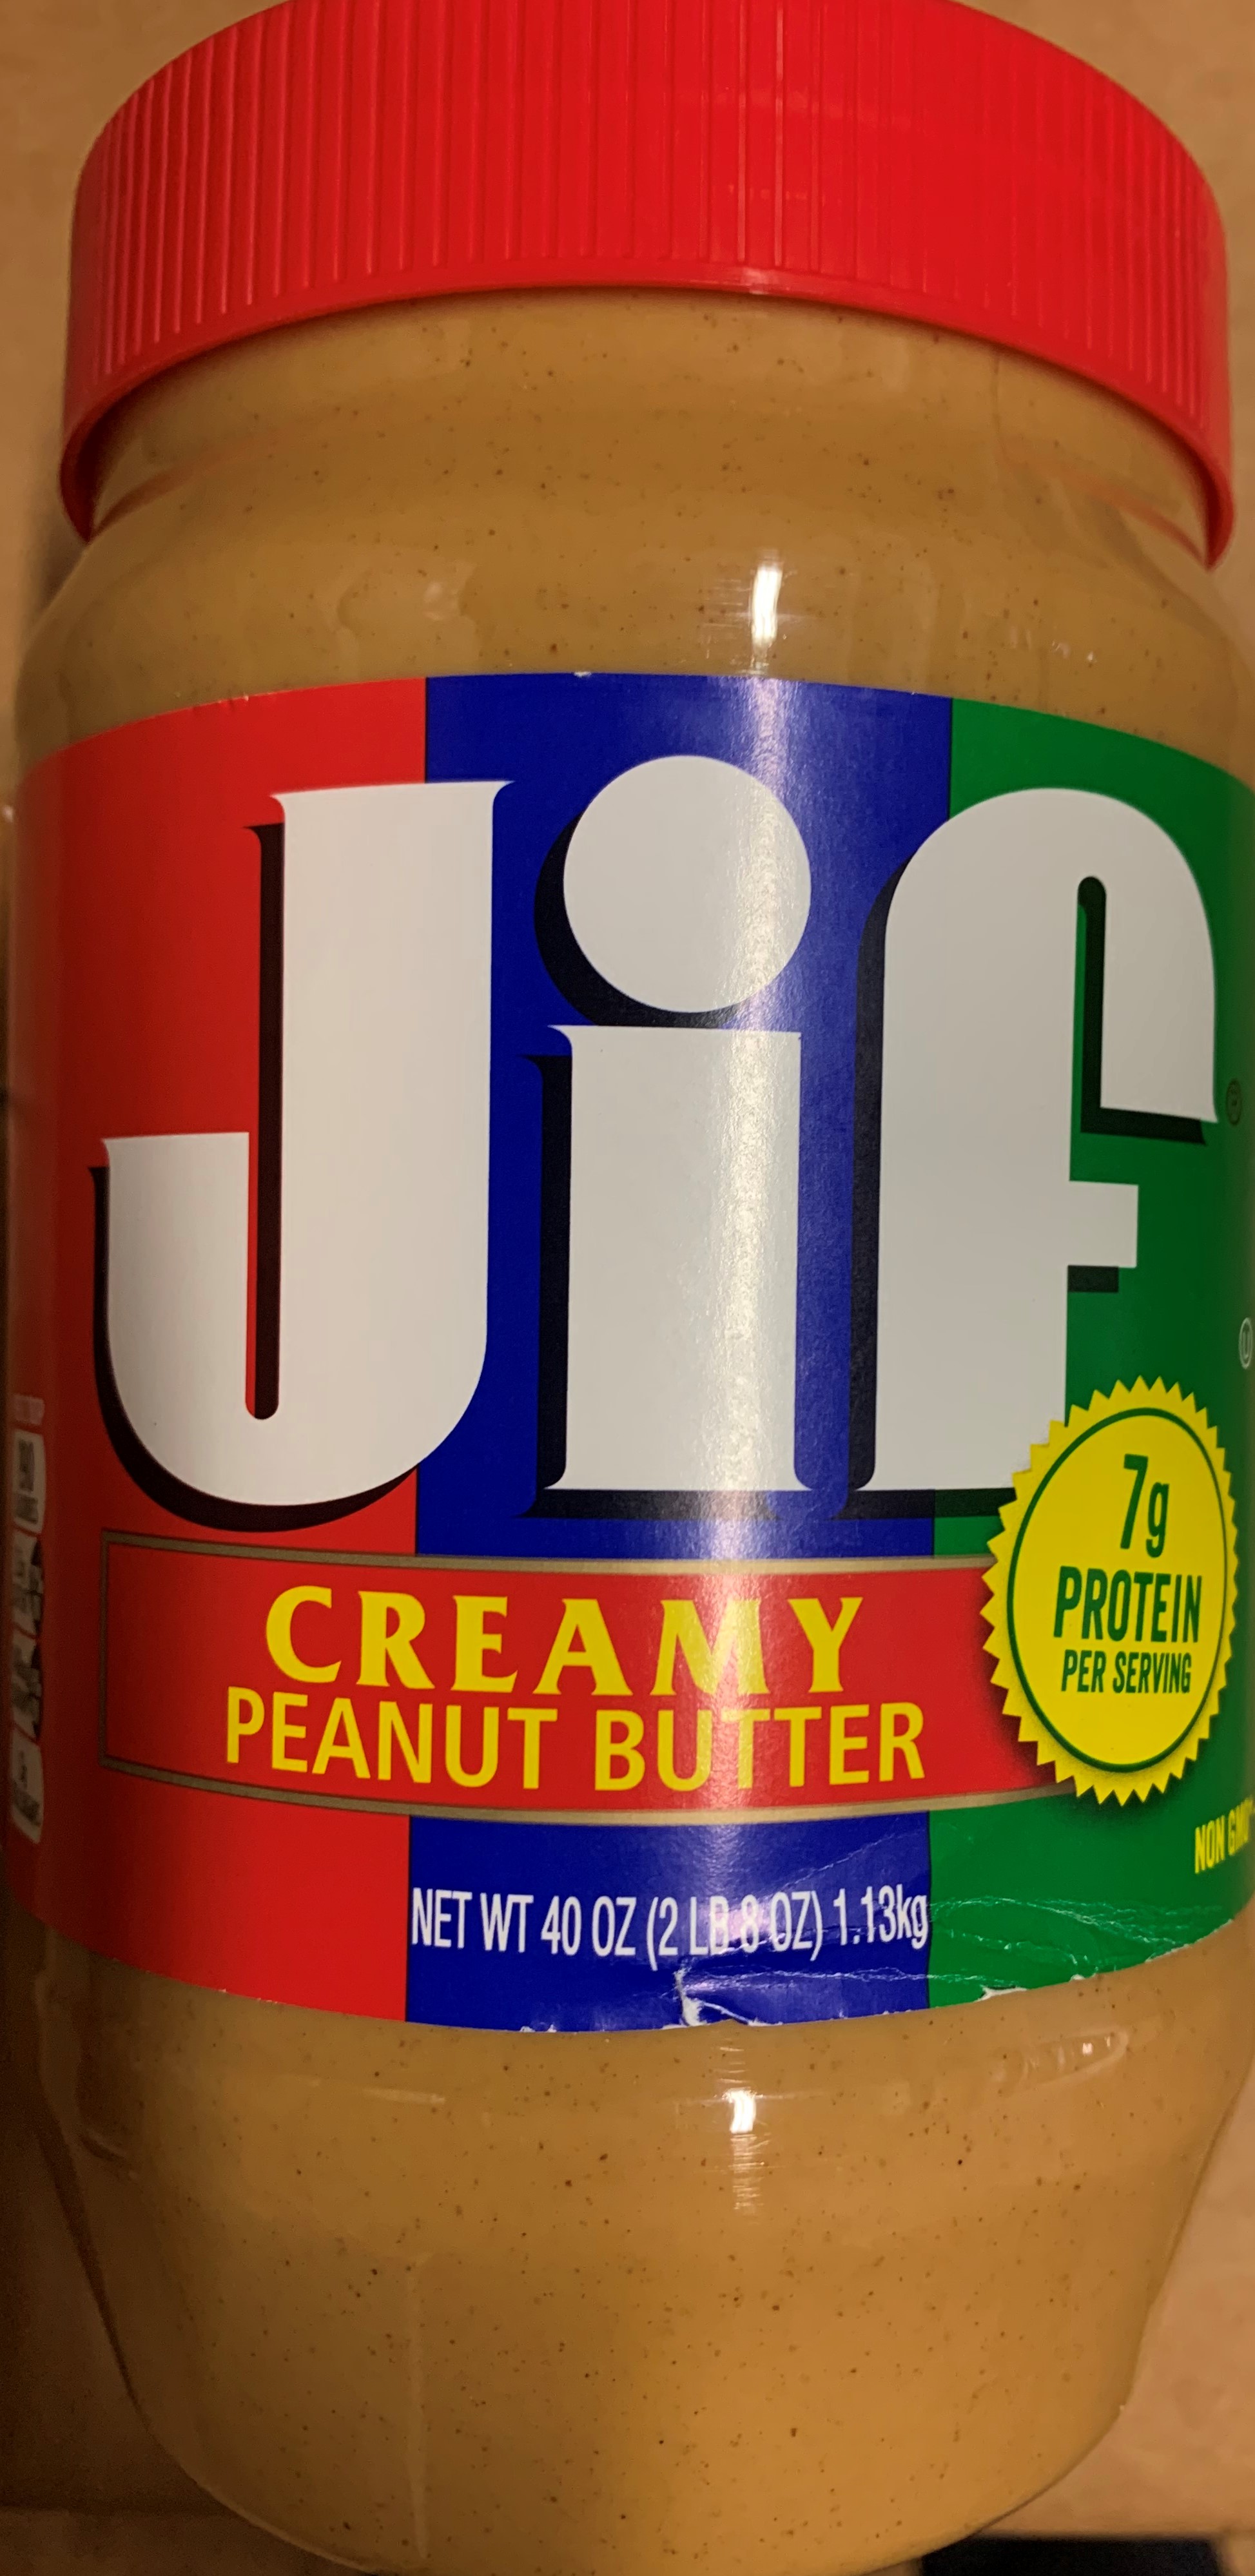 Jar of Jif brand Creamy Peanut Butter (1.13kg)